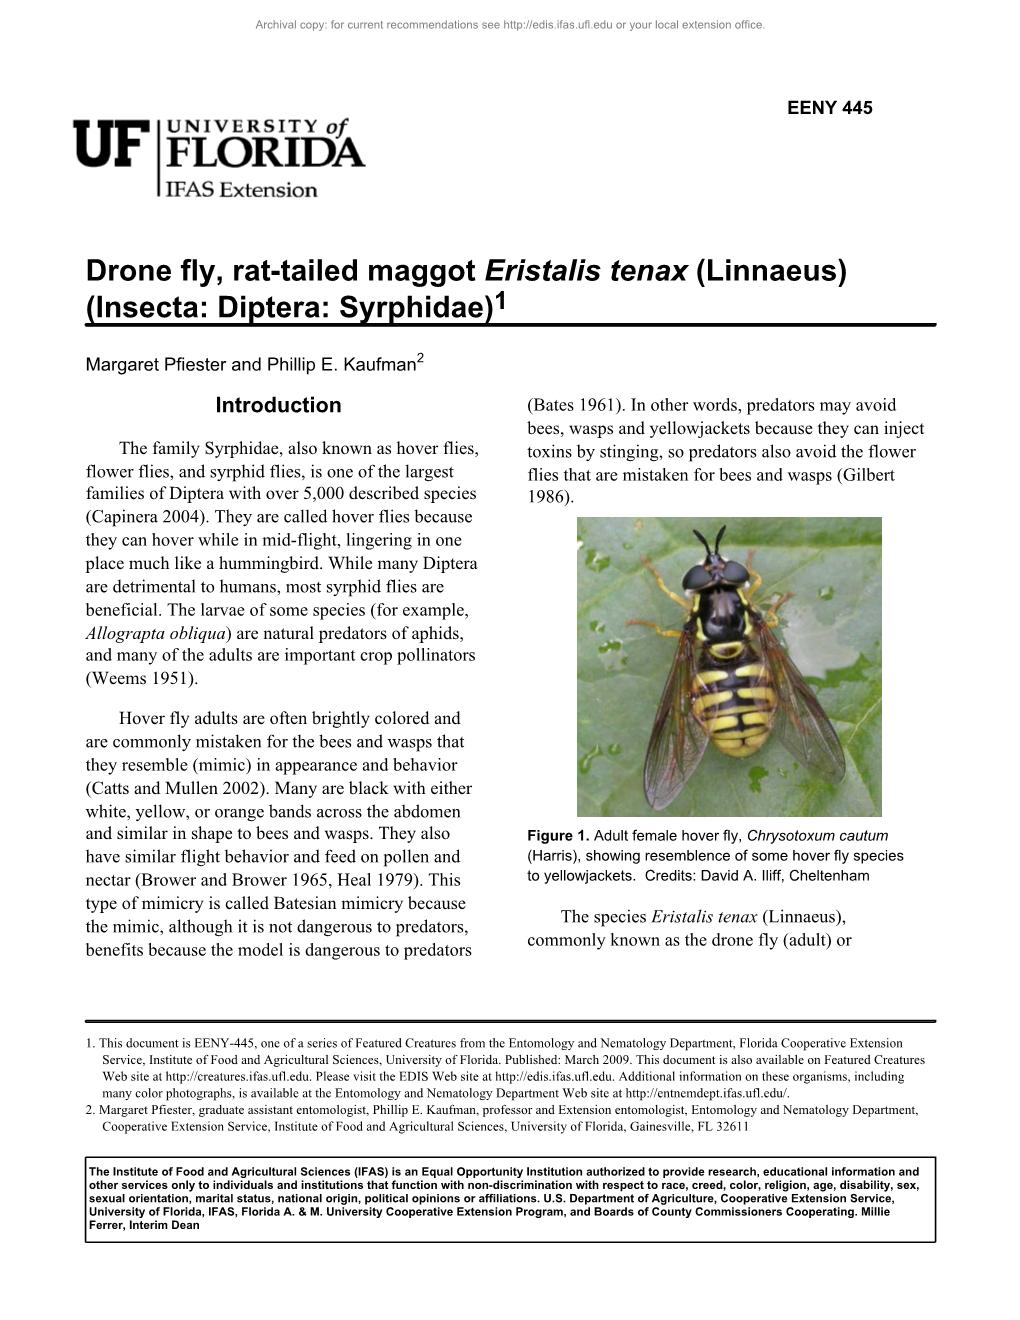 Drone Fly, Rat-Tailed Maggot Eristalis Tenax (Linnaeus) (Insecta: Diptera: Syrphidae)1